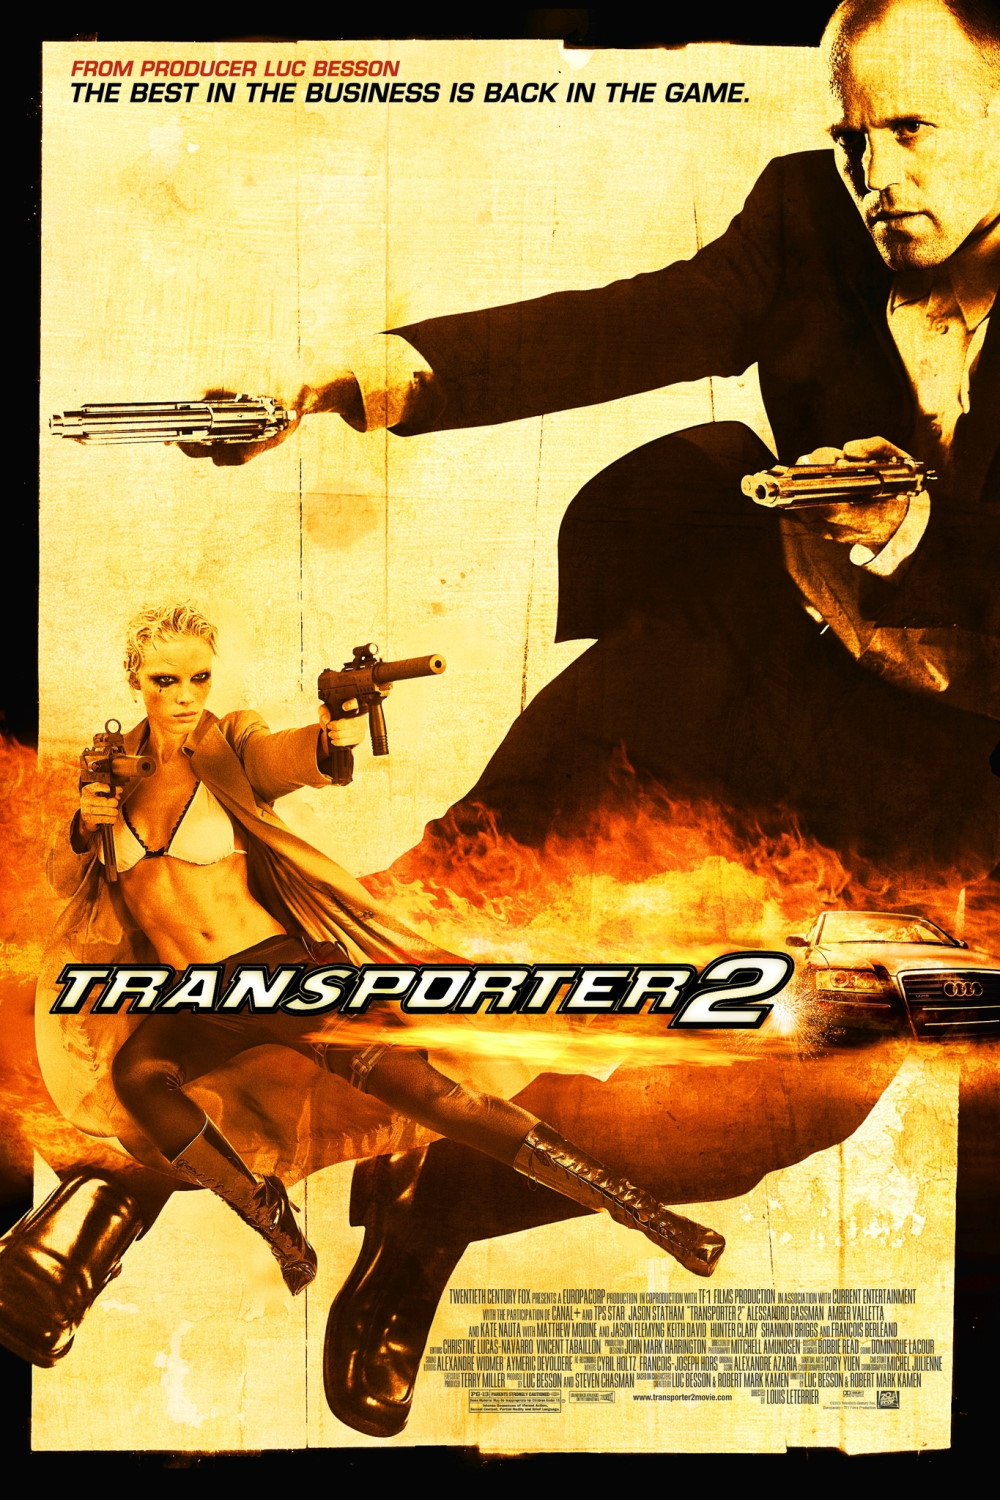 Transporter 2 (2005) Poster